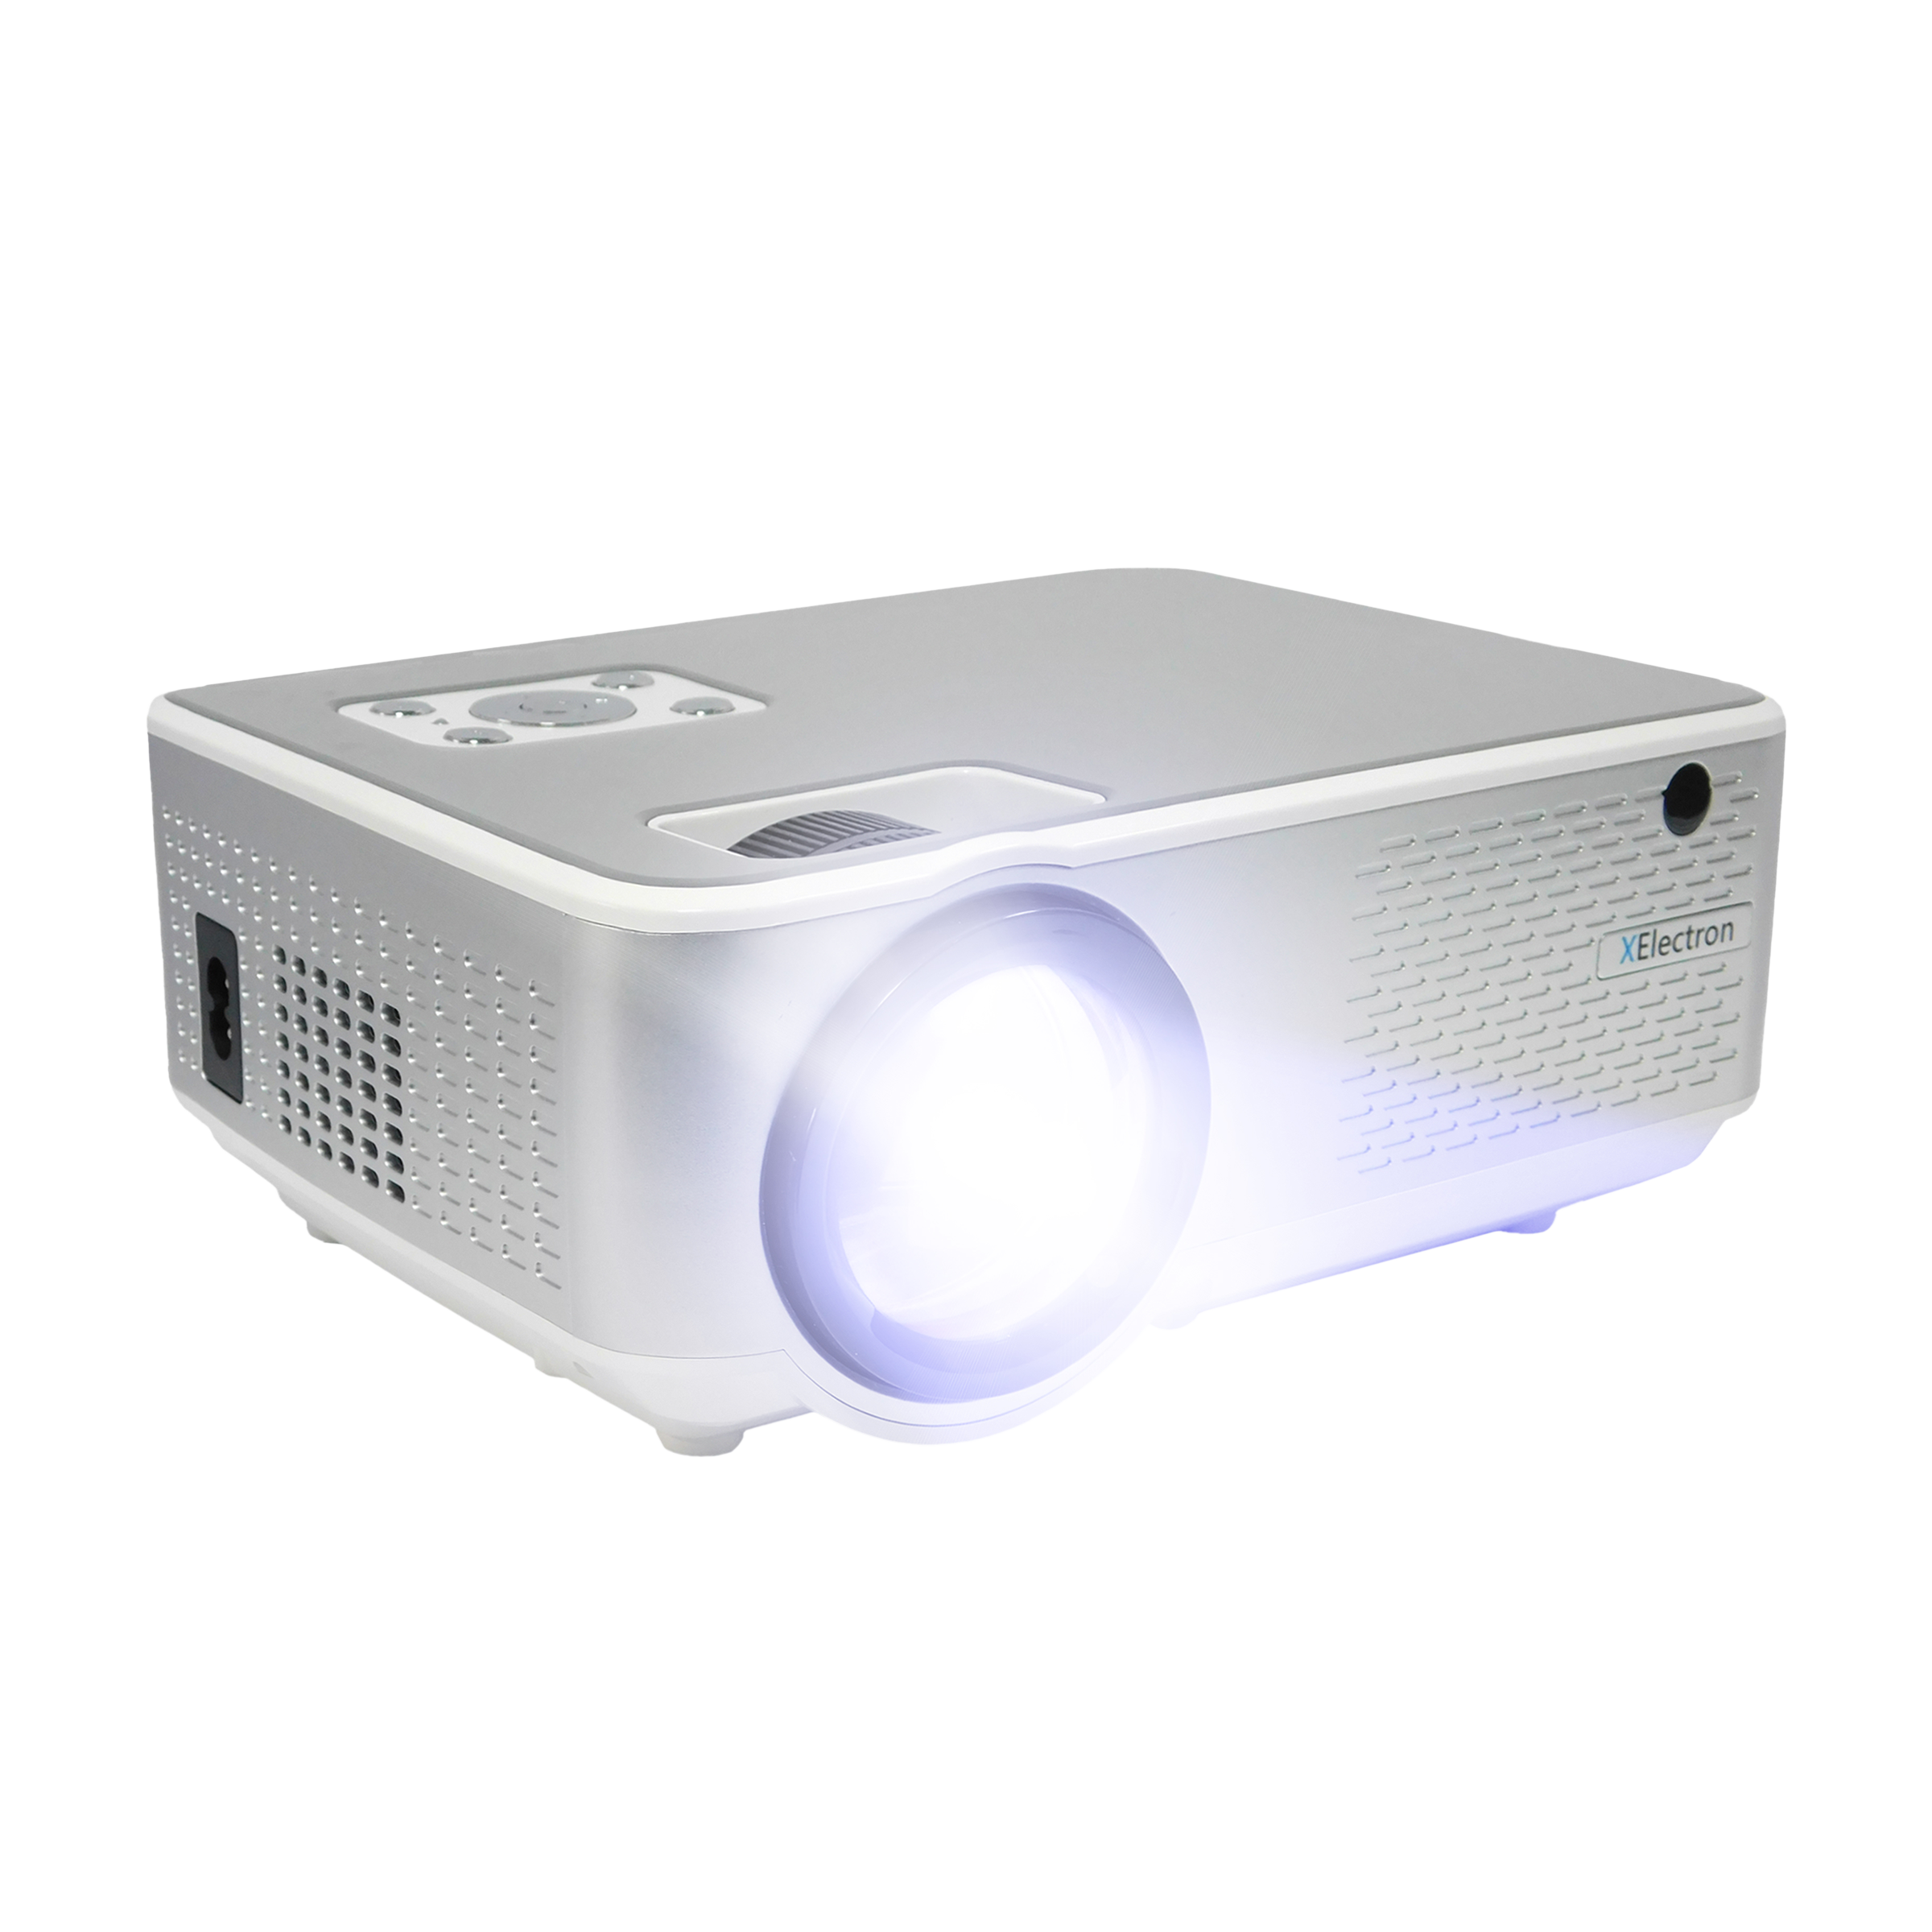 XElectron C9 Standard Full HD LED Projector (3800 Lumens, USB + HDMI + AV + VGA Ports, 1080p Support, White)